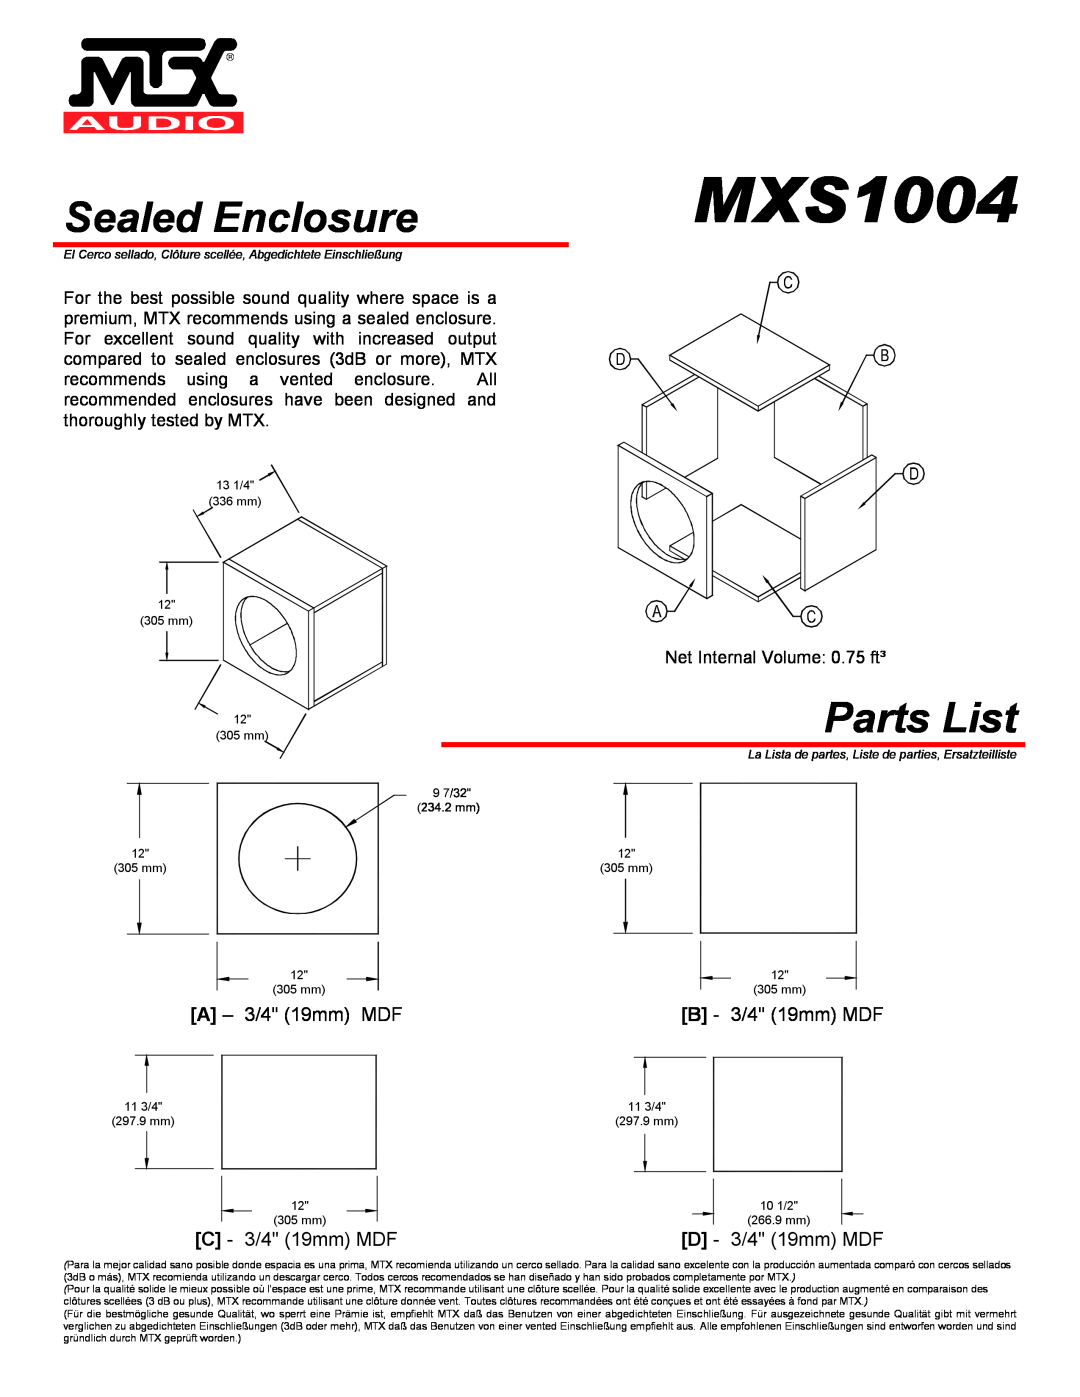 MTX Audio MXS1004 Sealed Enclosure, Parts List, A - 3/4 19mm MDF, B - 3/4 19mm MDF, C - 3/4 19mm MDF, D - 3/4 19mm MDF 